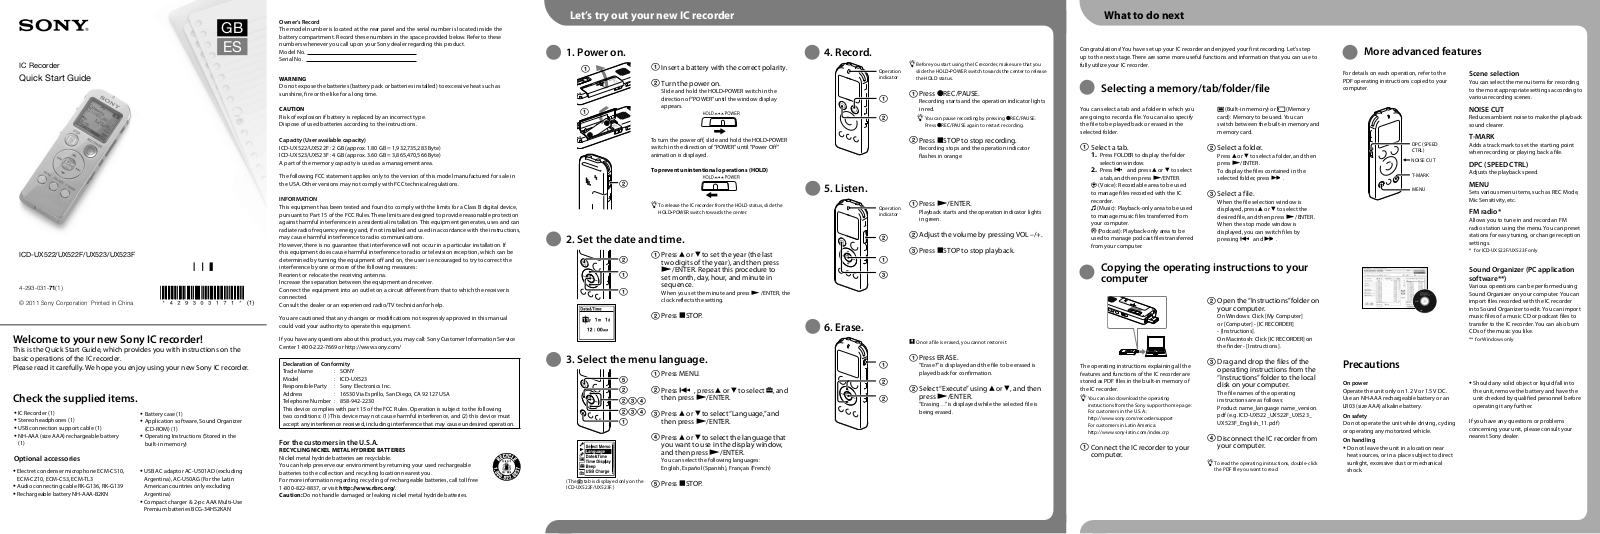 Sony ICD-UX522, ICD-UX522F, ICD-UX523F User Manual